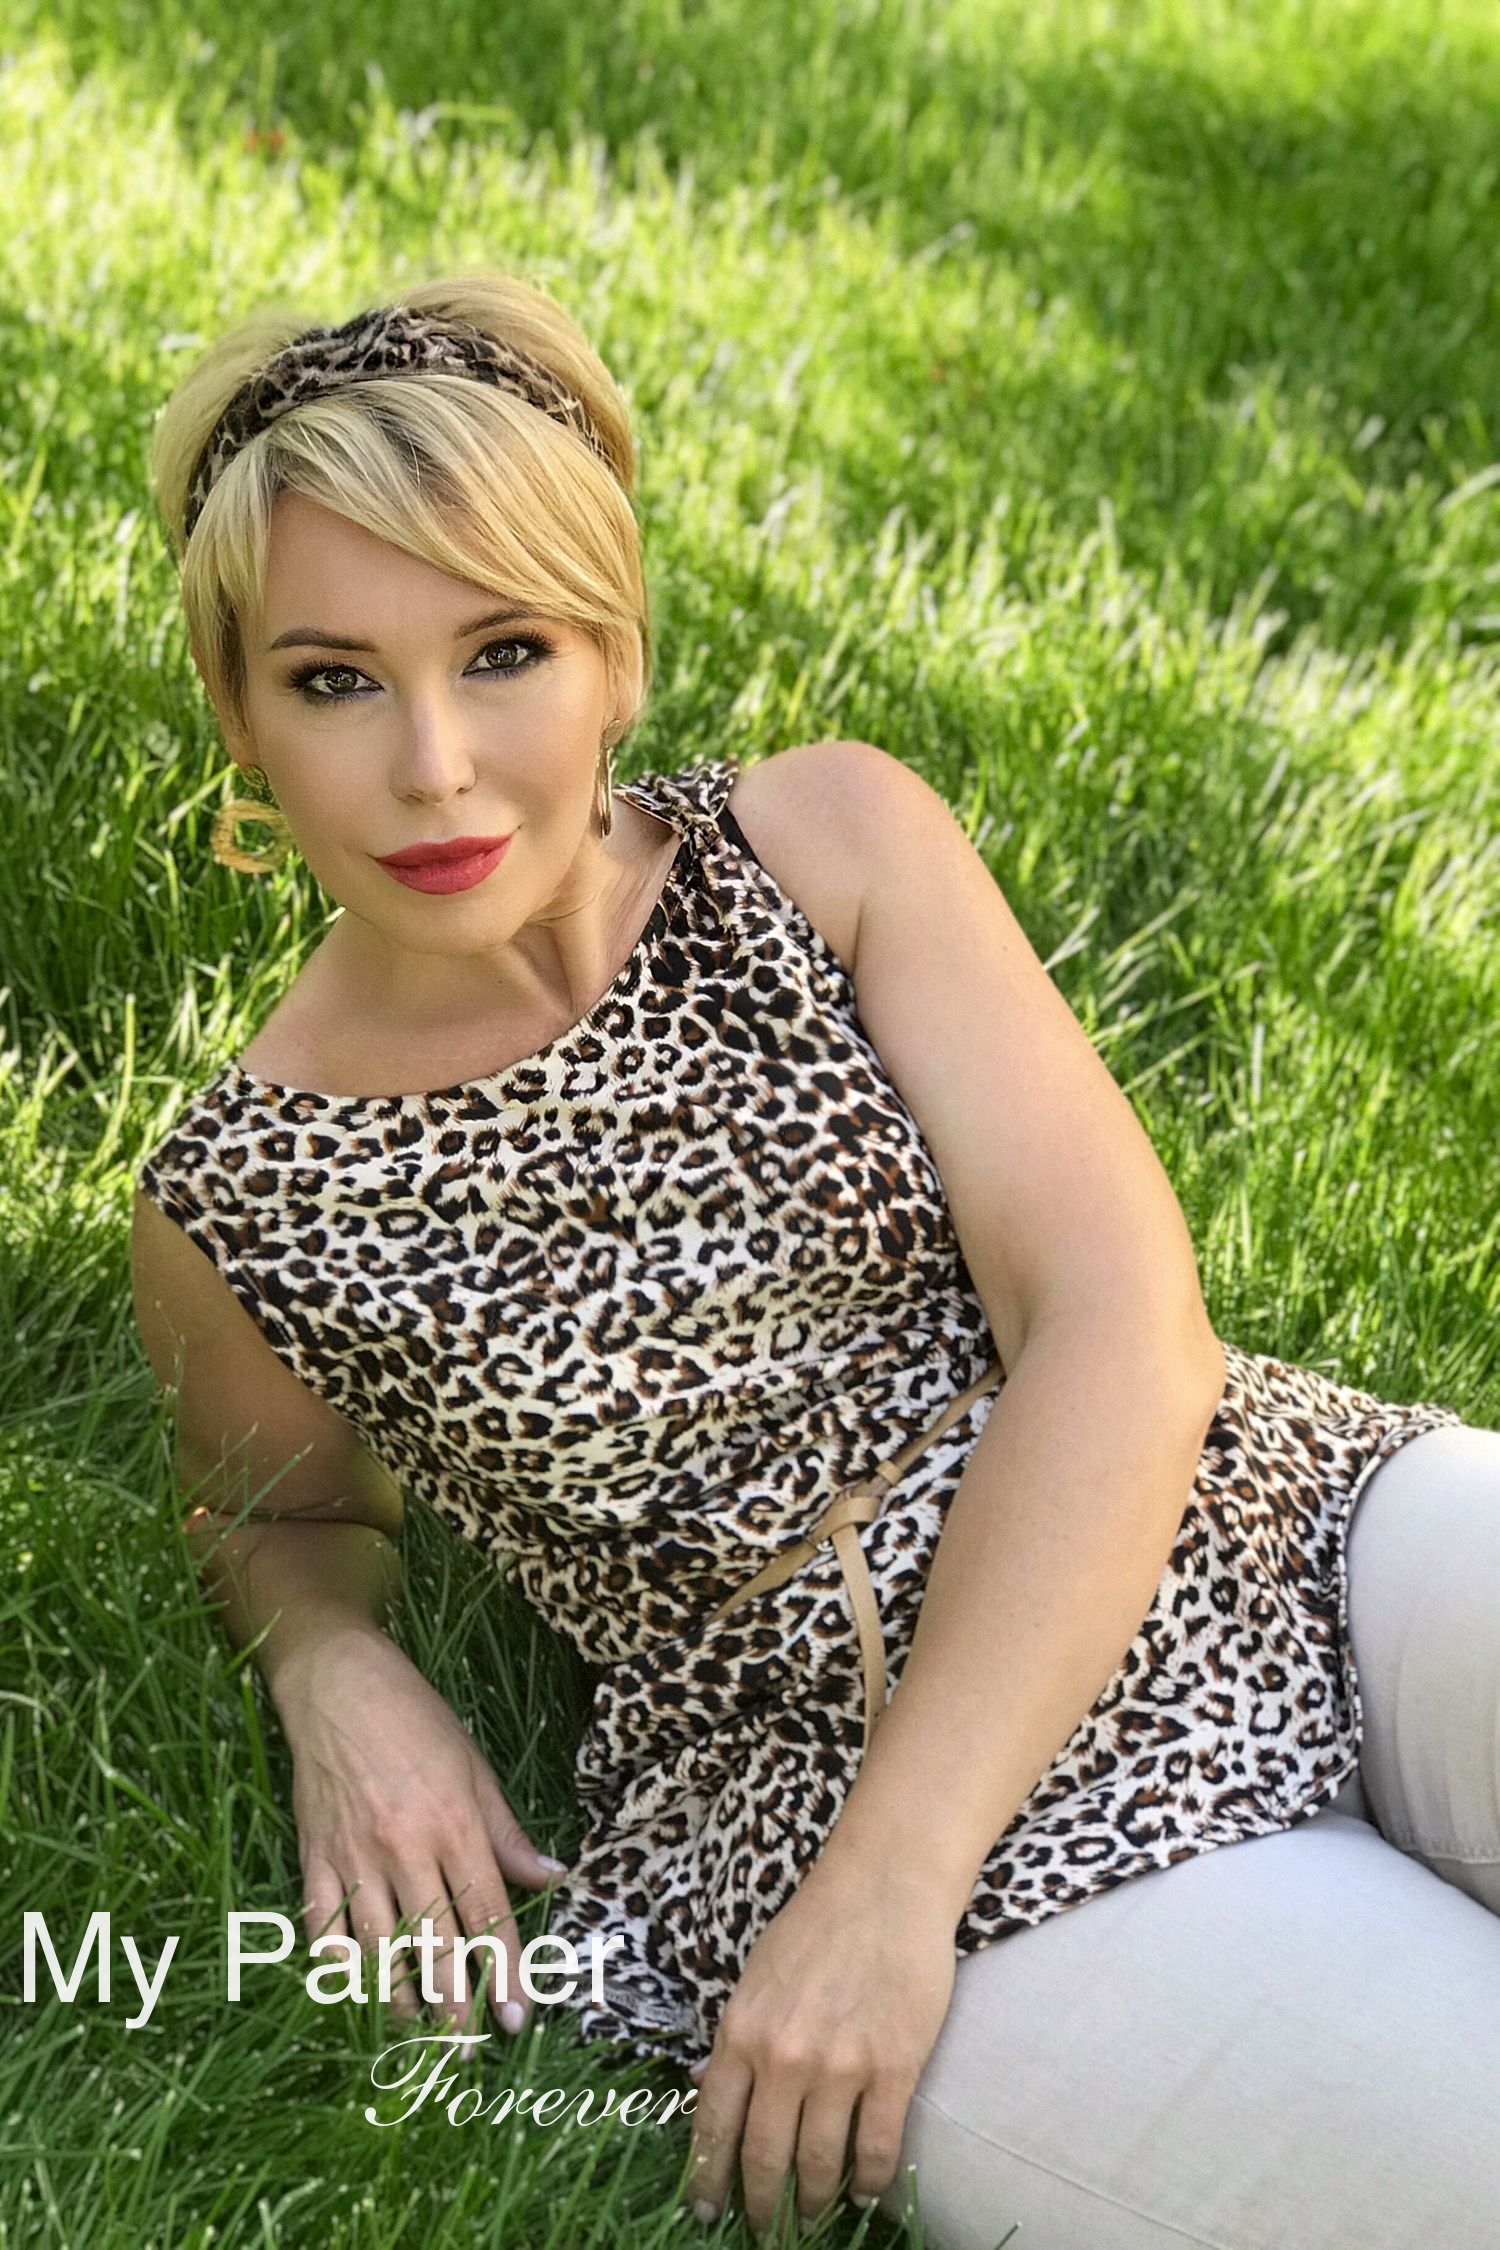 Datingsite to Meet Sexy Russian Lady Oksana from Tallinn, Estonia